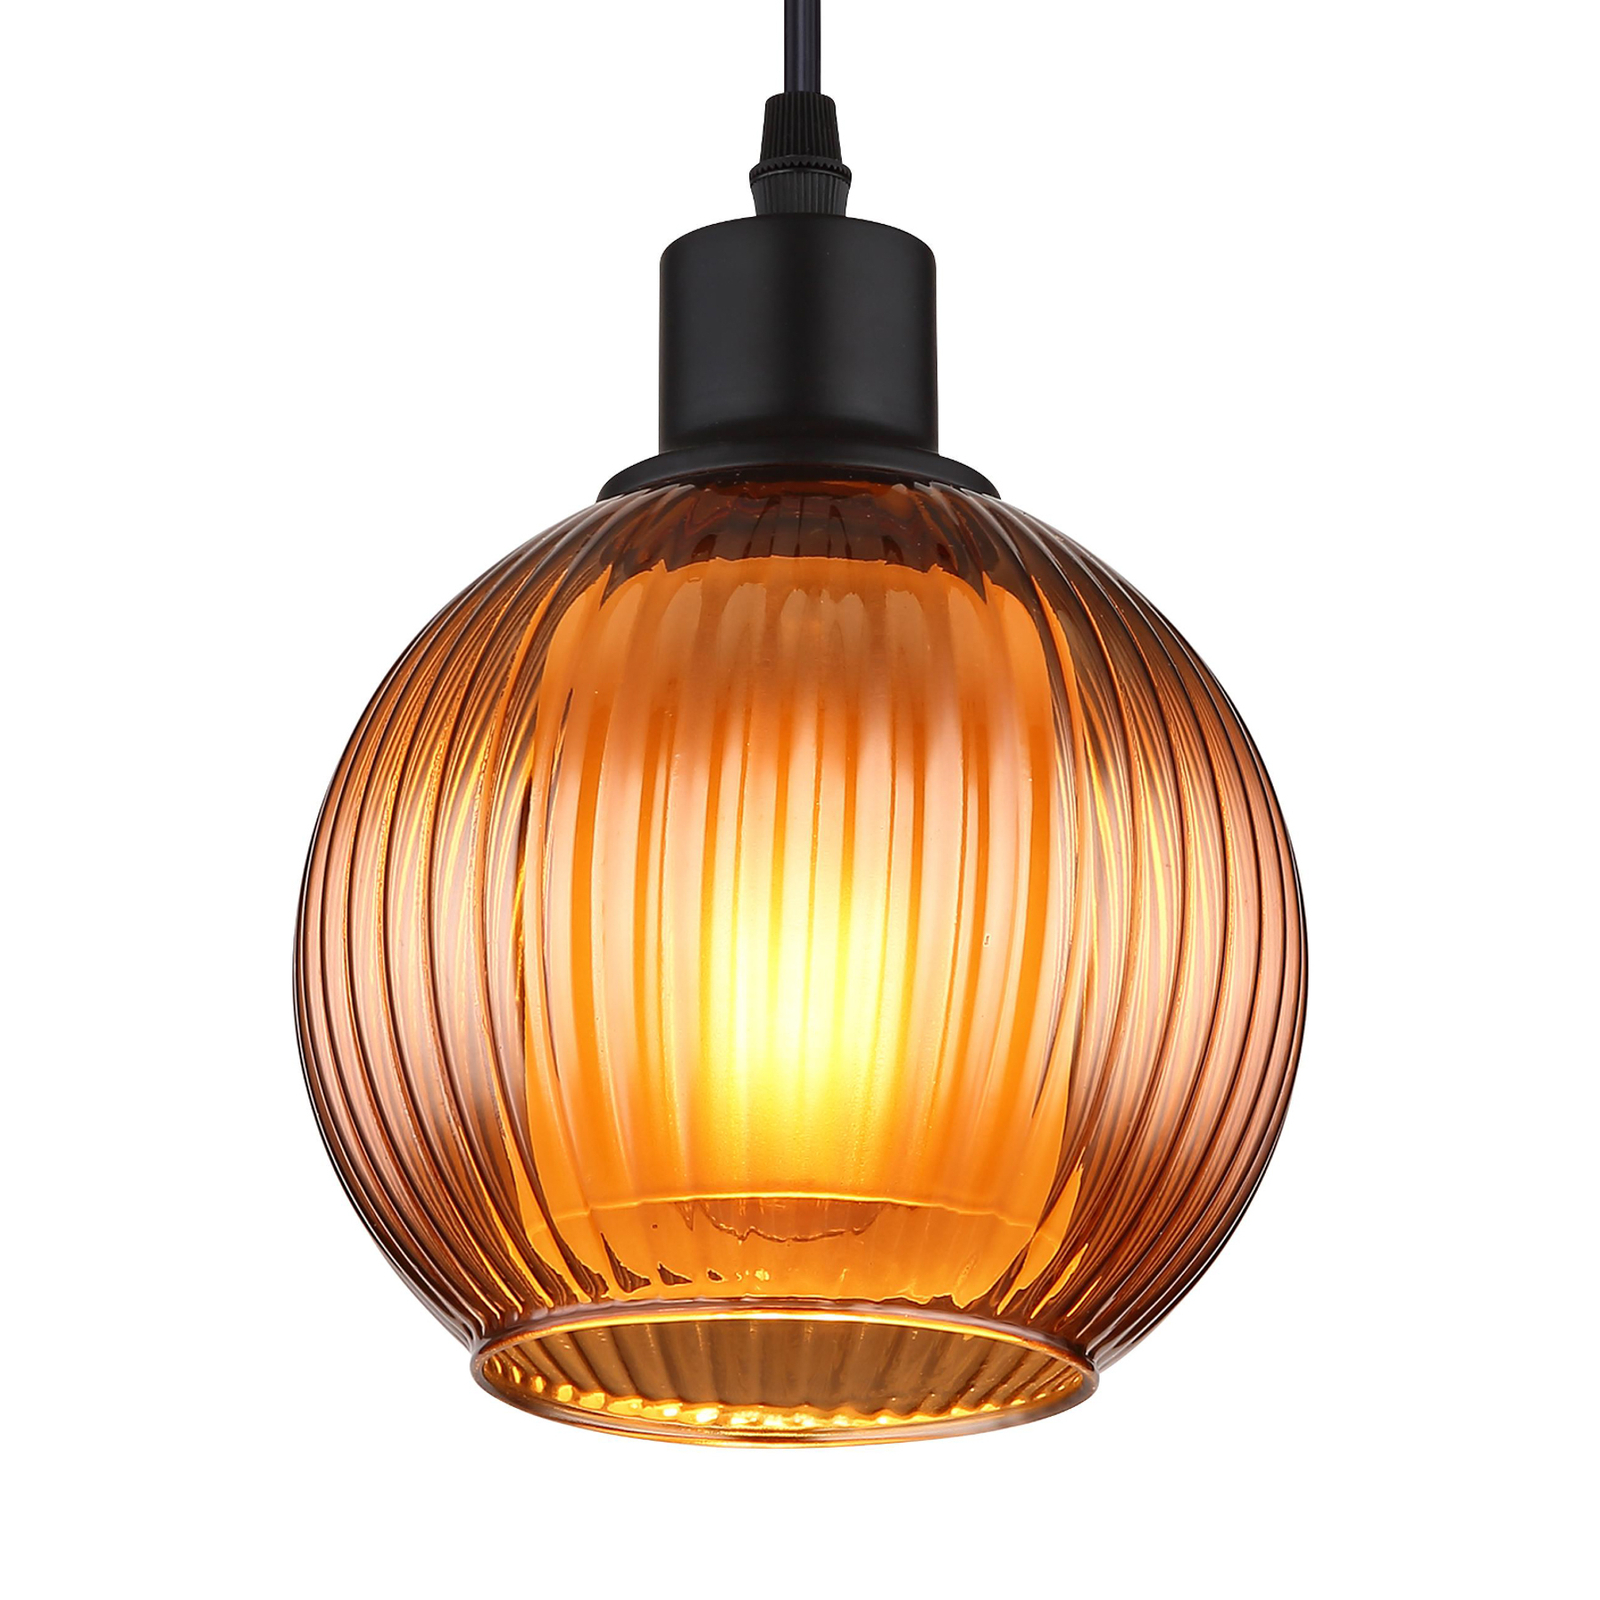 Hanglamp Zumba, bronskleurig, Ø 15 cm, glas